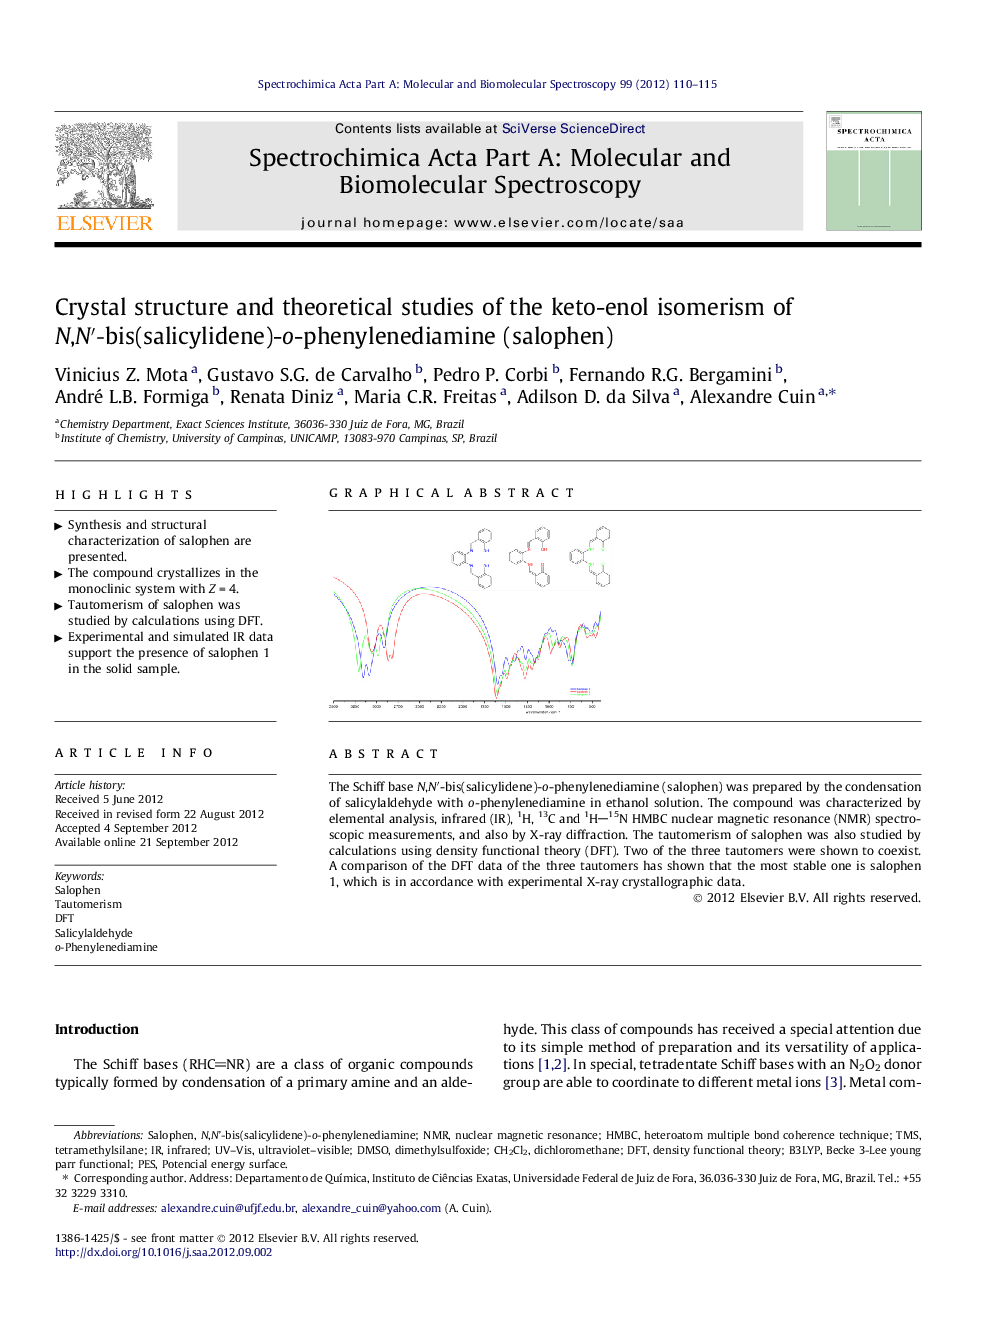 Crystal structure and theoretical studies of the keto-enol isomerism of N,N′-bis(salicylidene)-o-phenylenediamine (salophen)